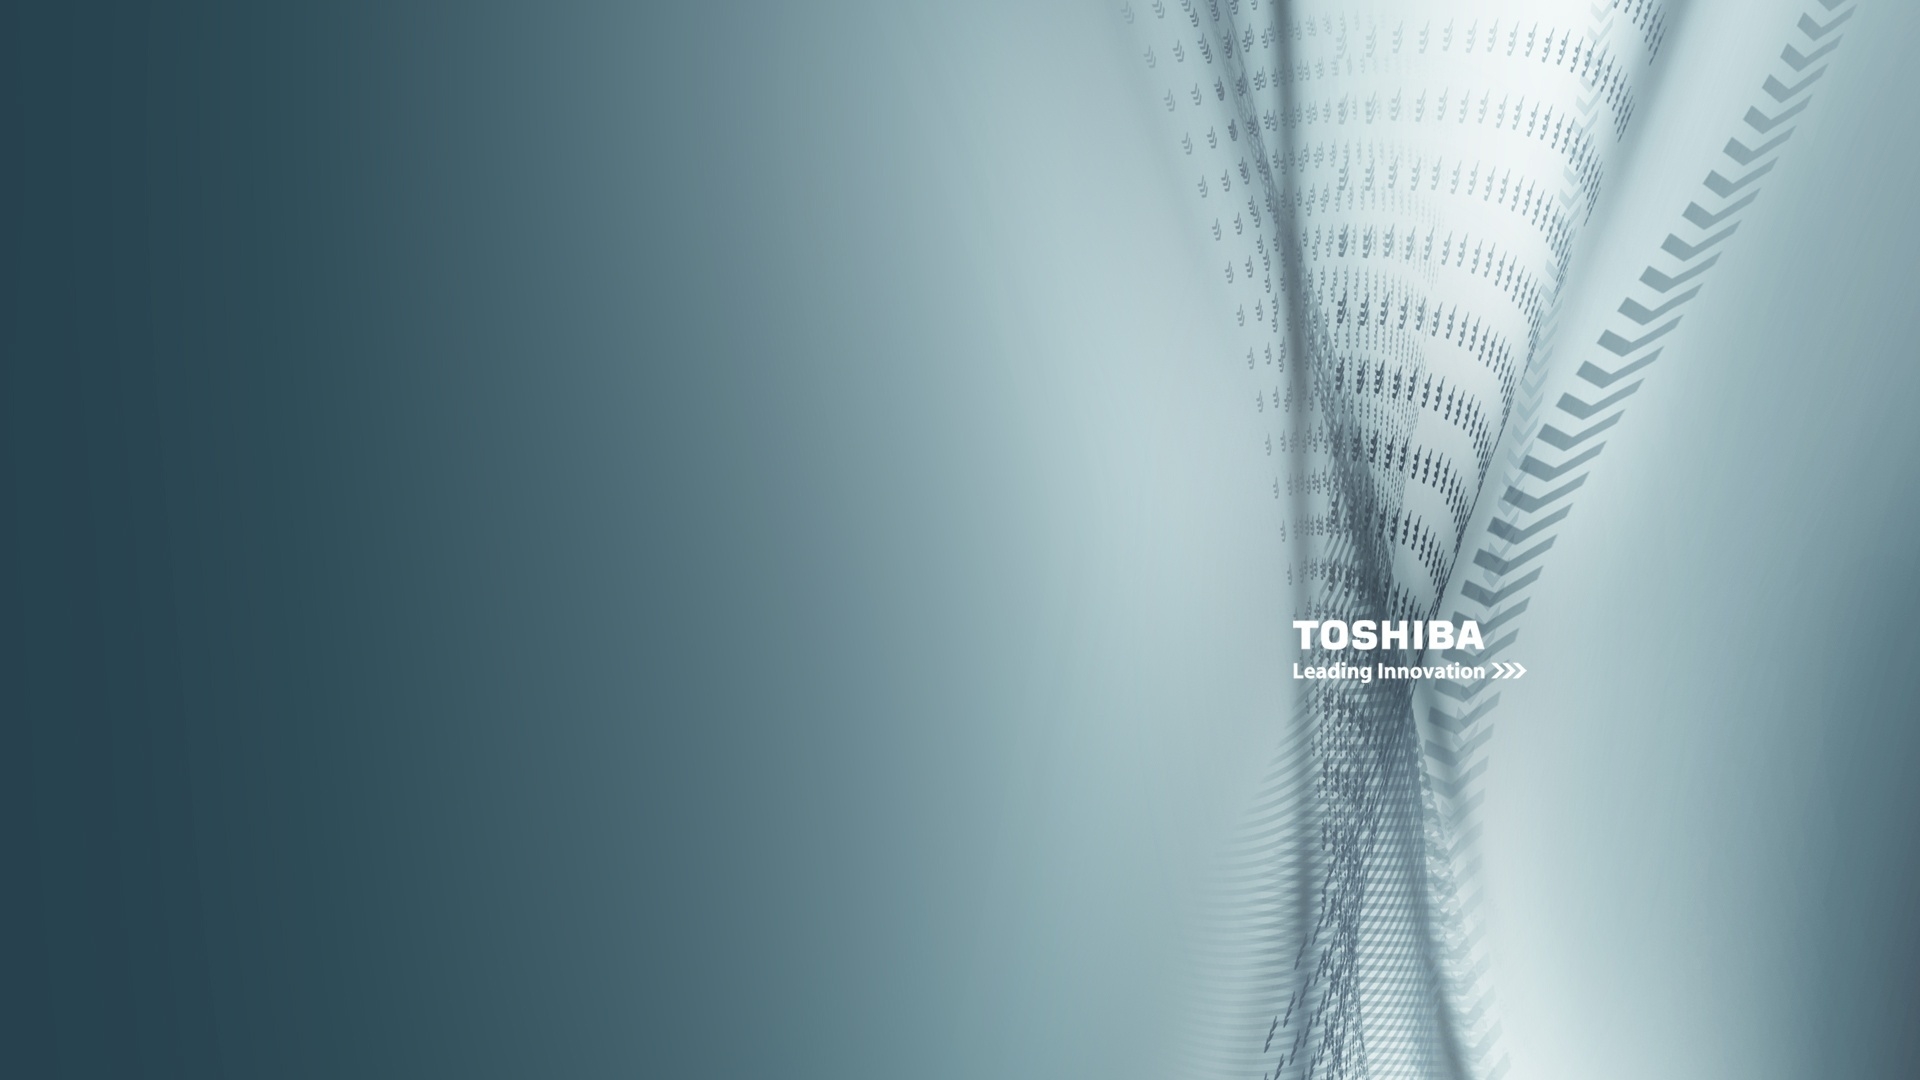 Toshiba Innovation for 1920 x 1080 HDTV 1080p resolution